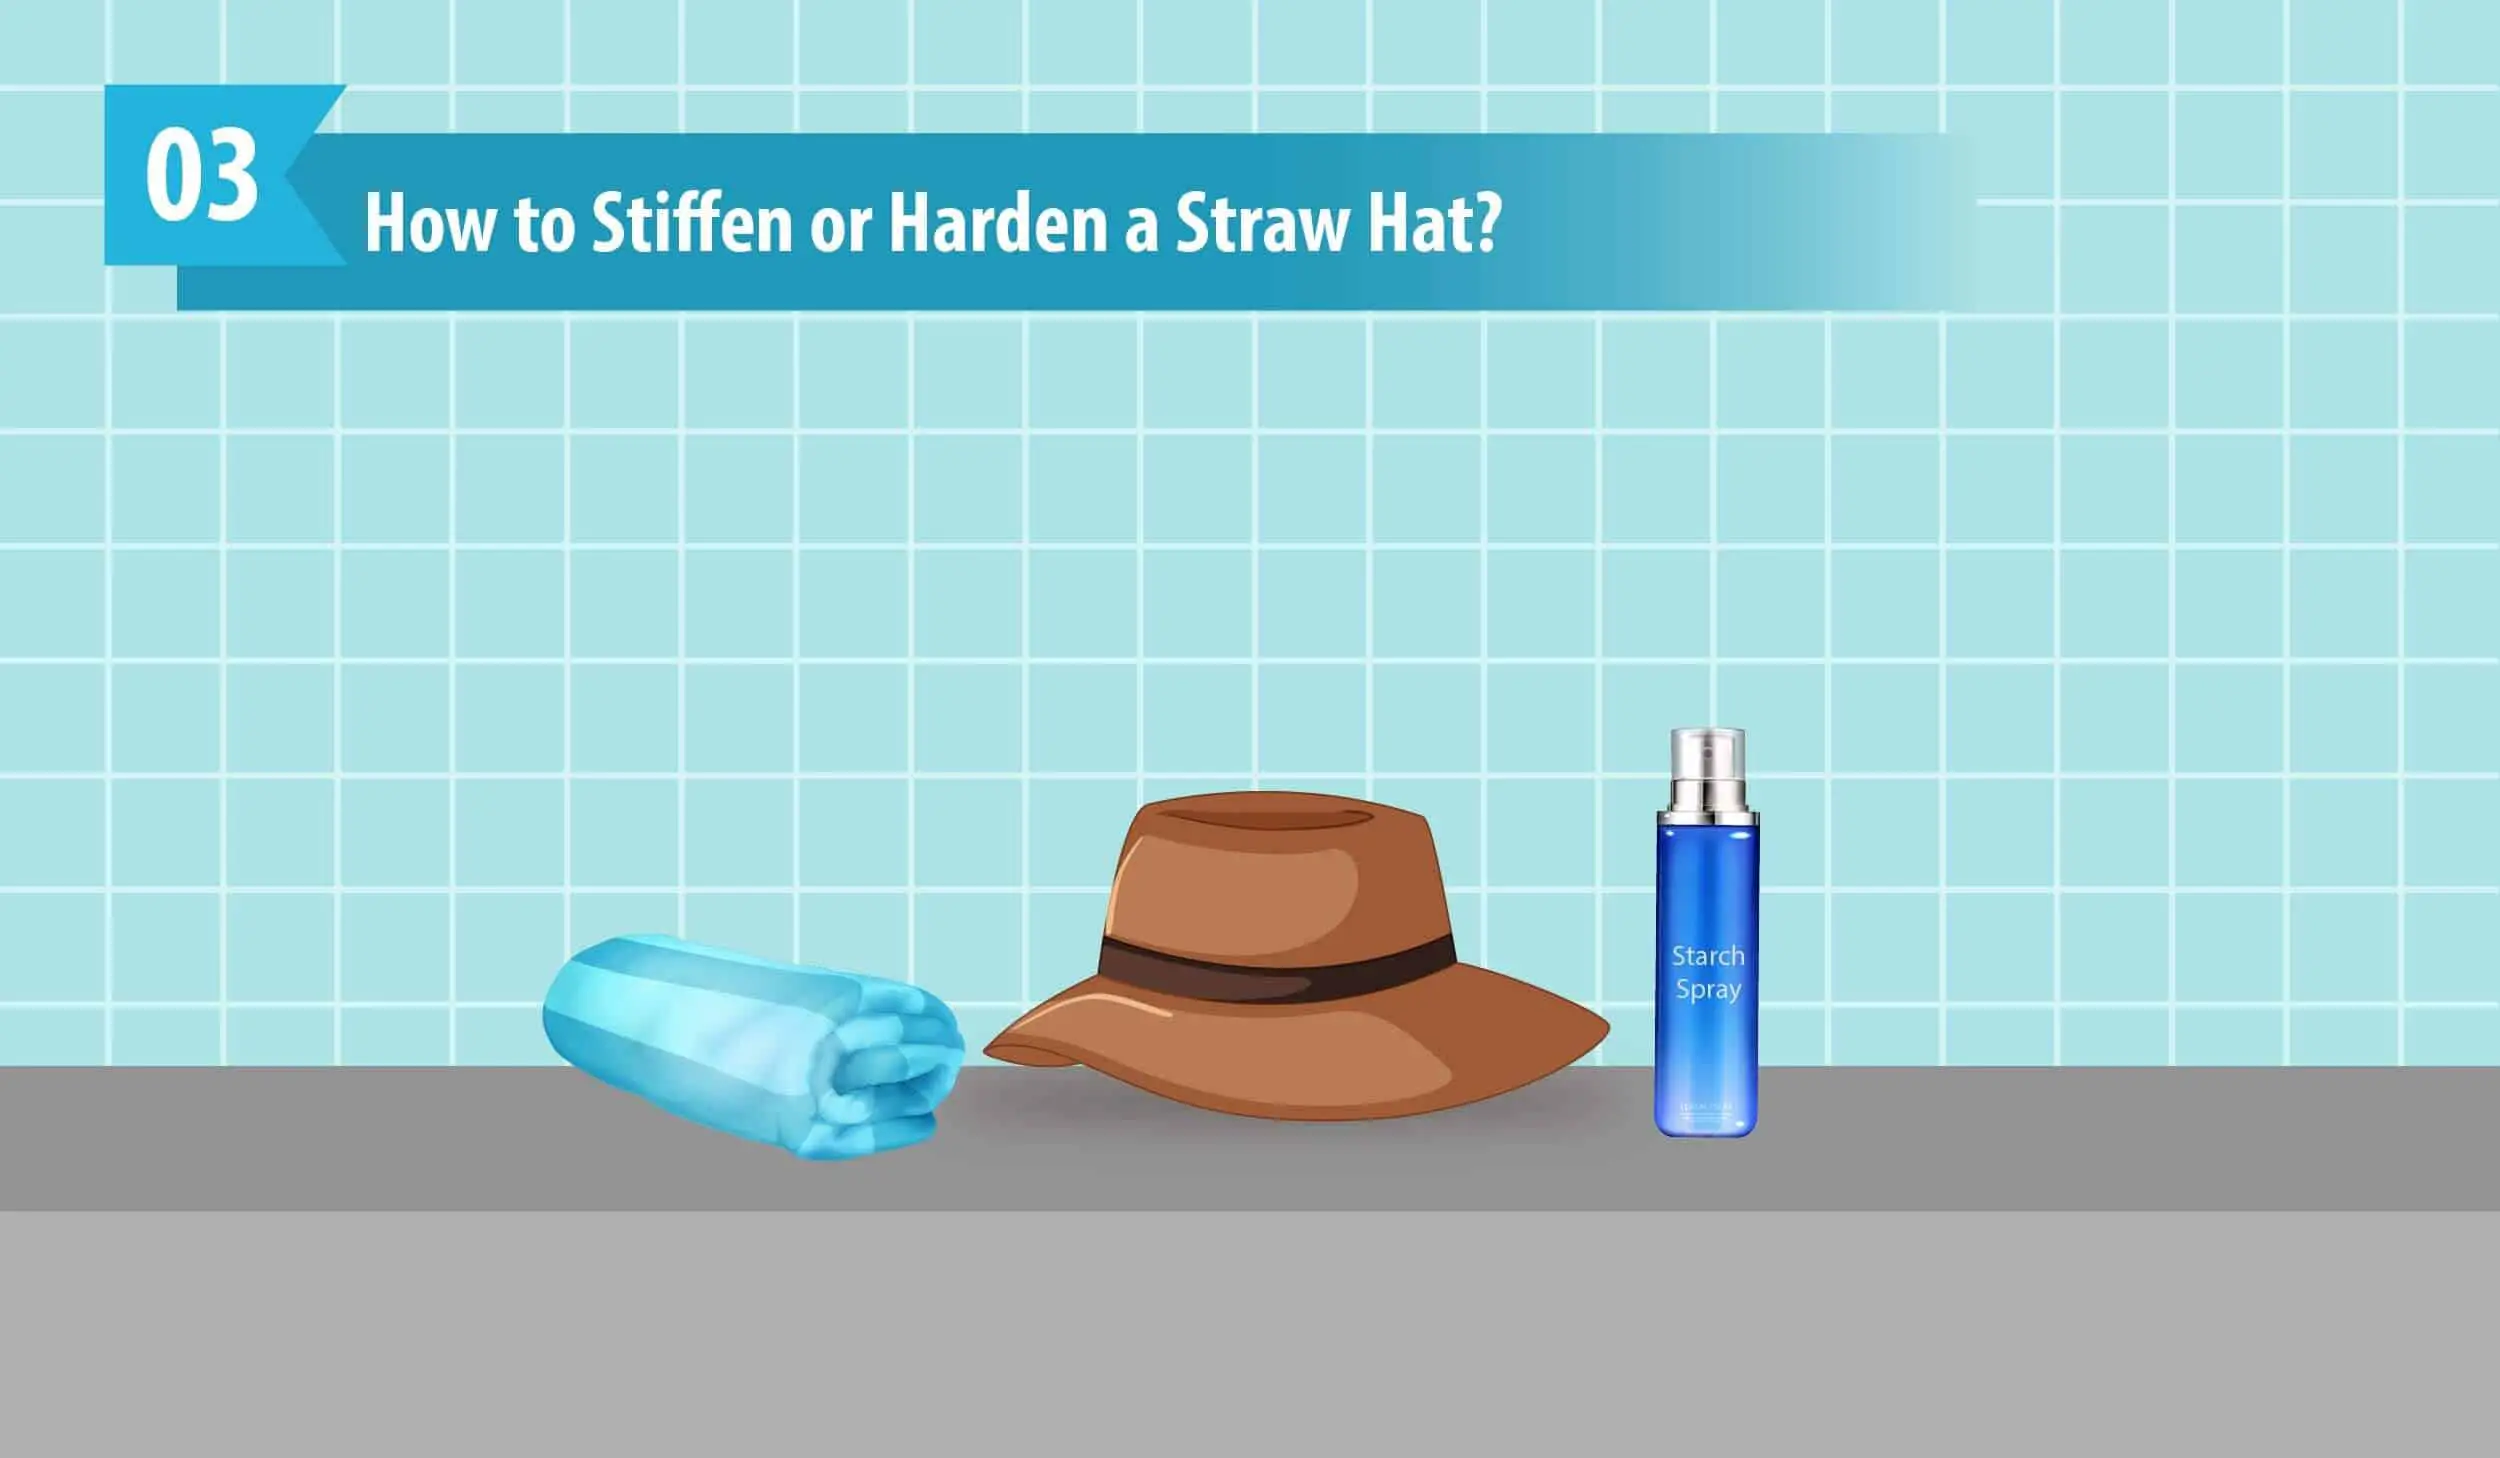 How to Stiffen or Harden a Straw Hat